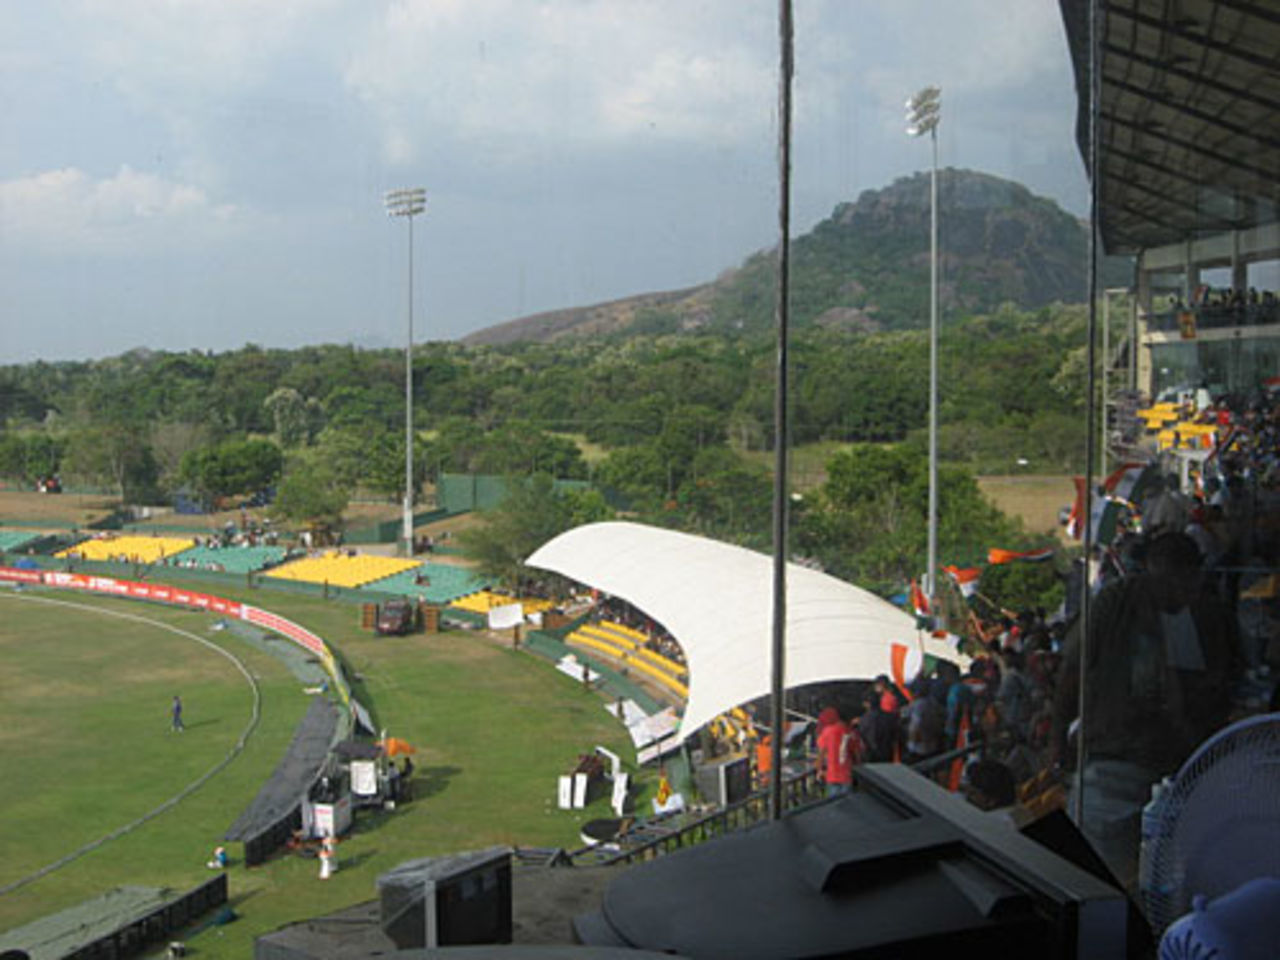 The view of the Dambulla ground from the press box, Dambulla, June 19, 2010